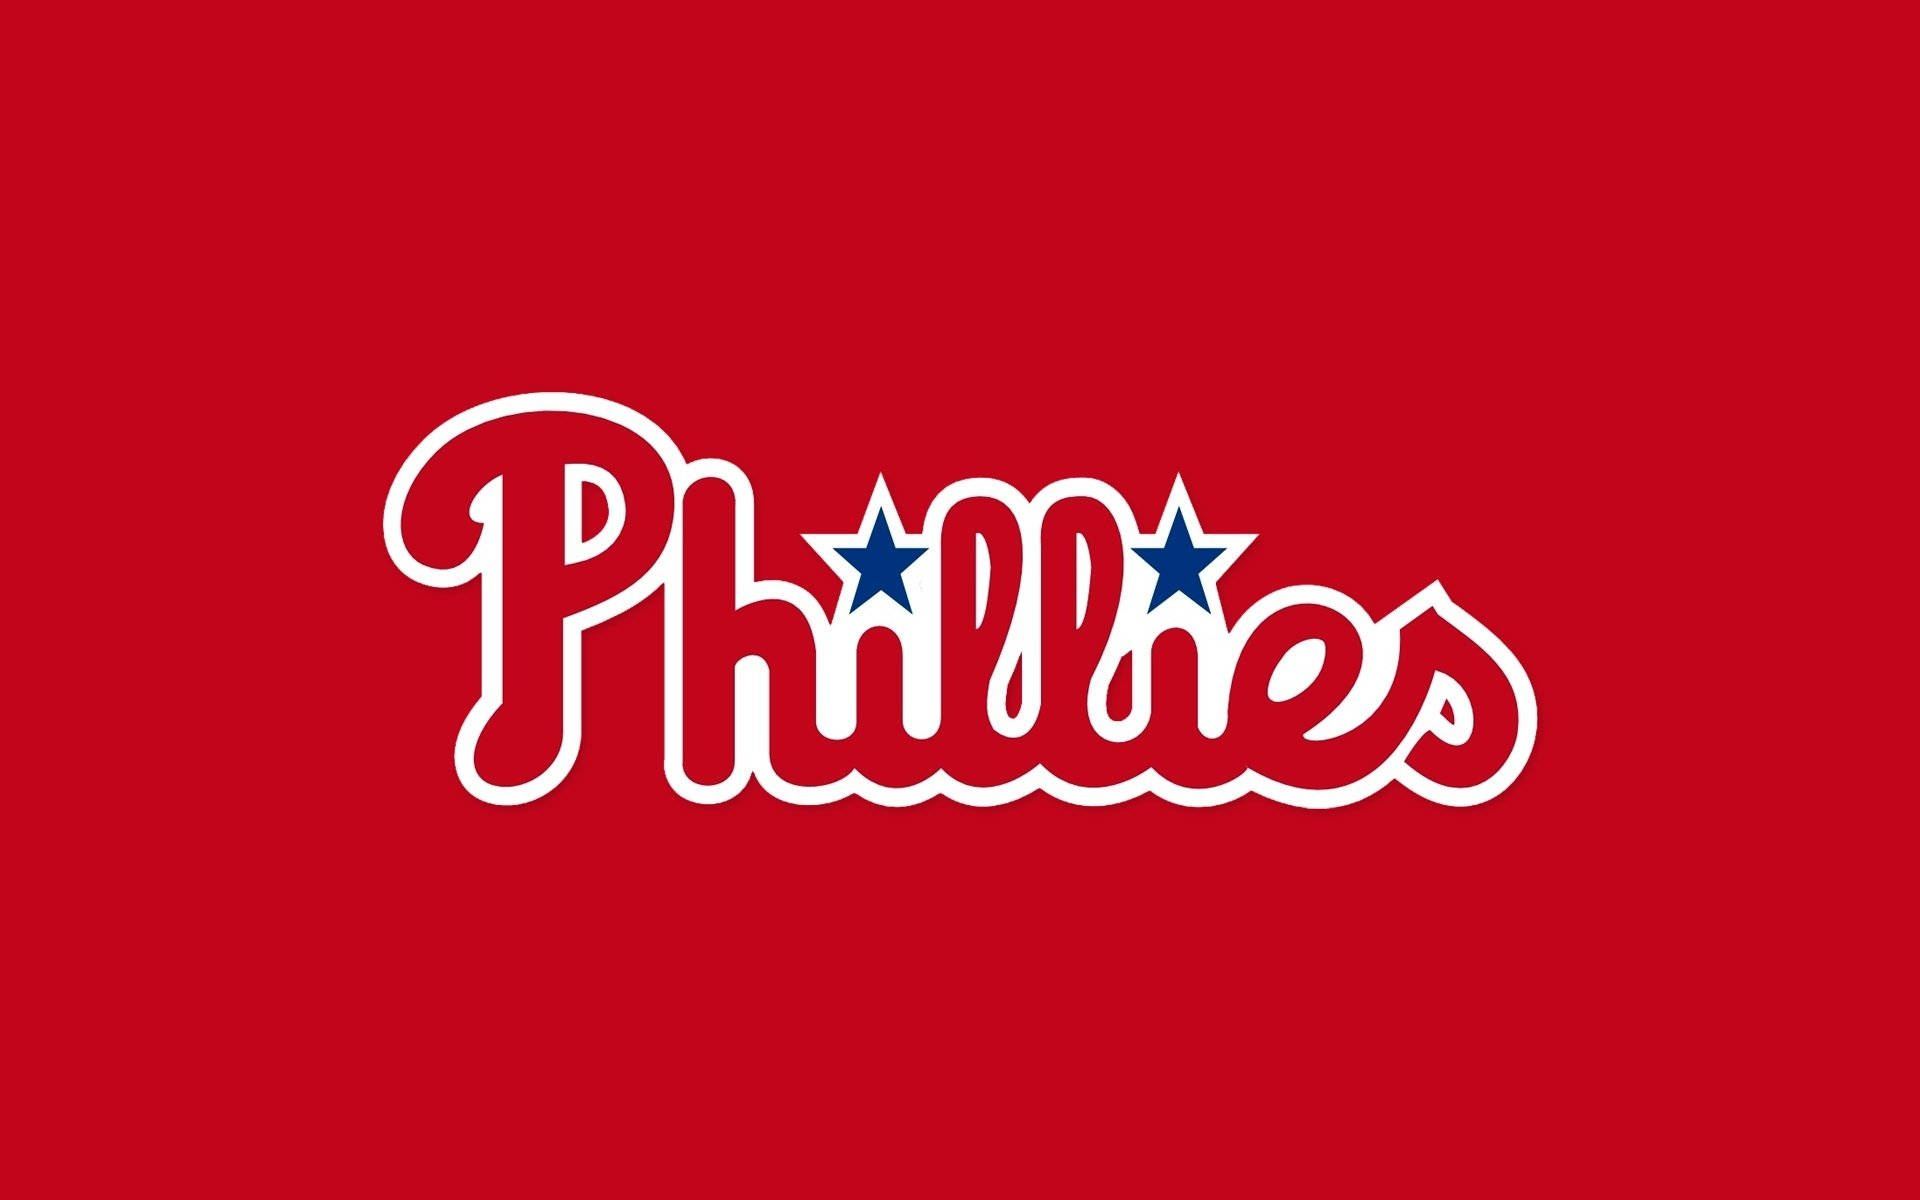 Philadelphia Phillies Word Mark Wallpaper